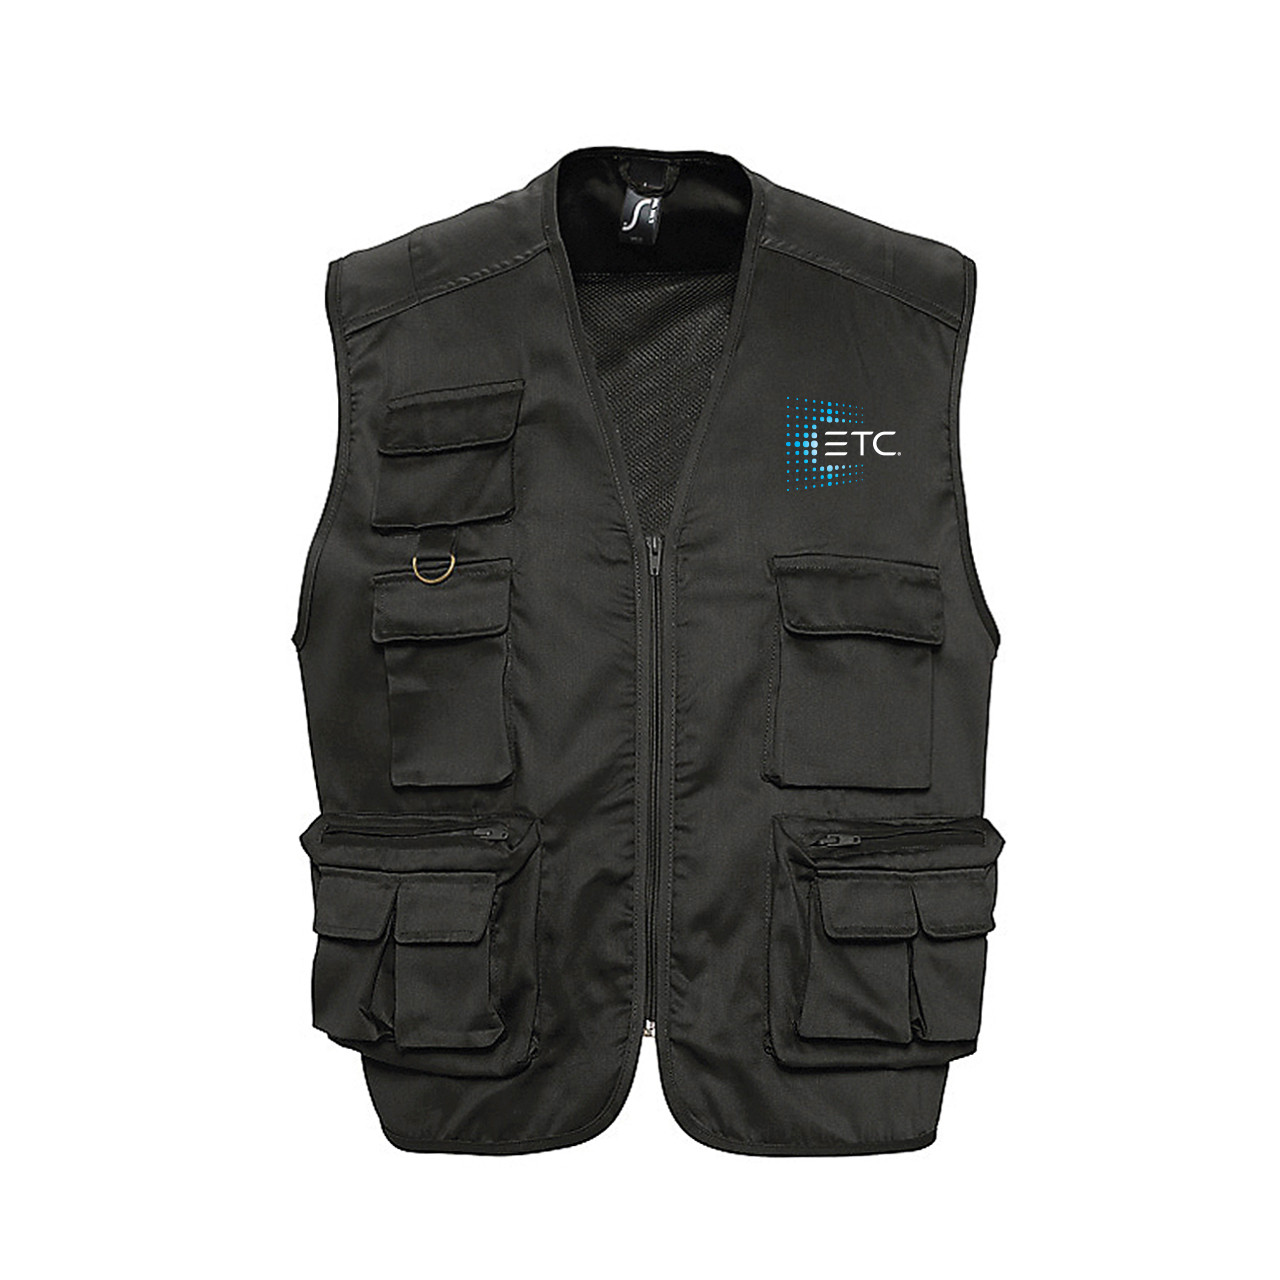 ETC Multi-pocket Reporter Jacket